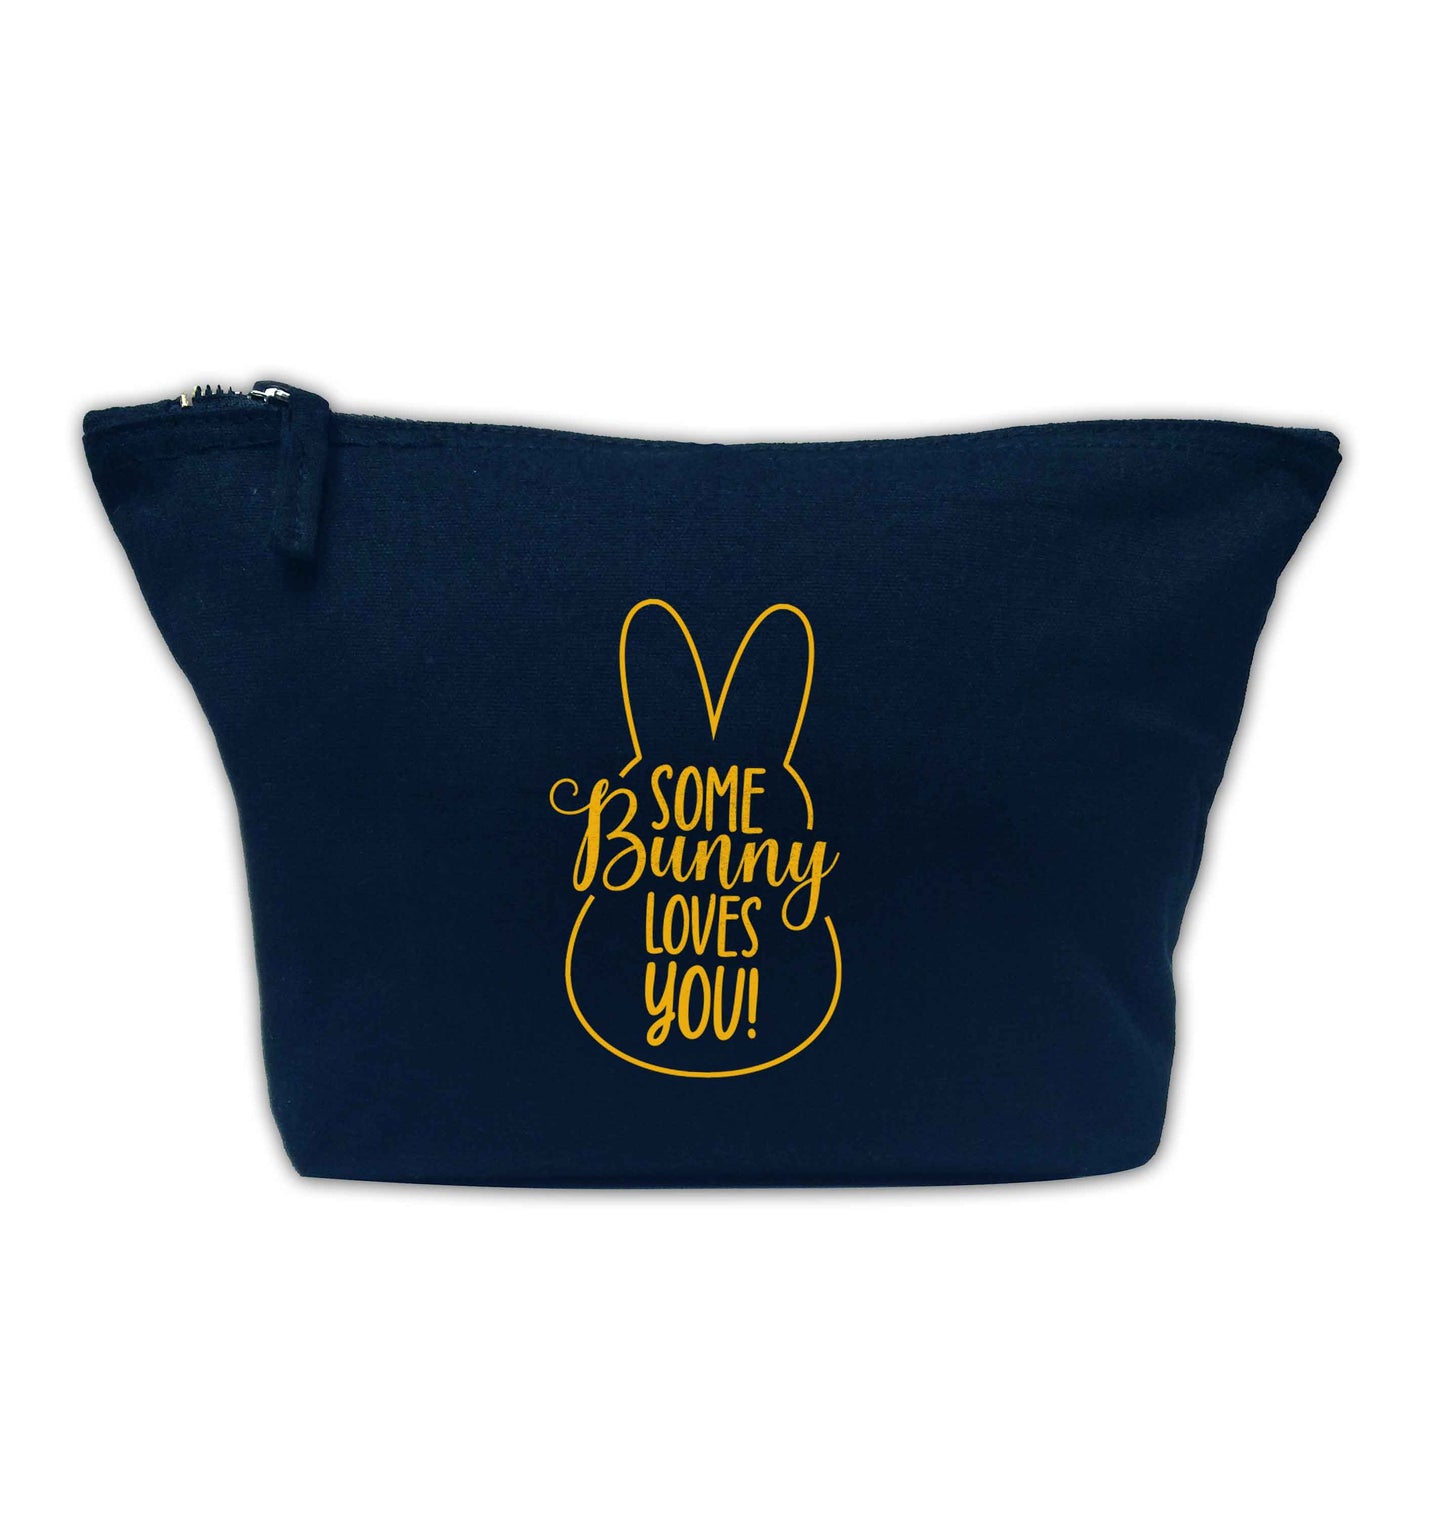 Some bunny loves you navy makeup bag